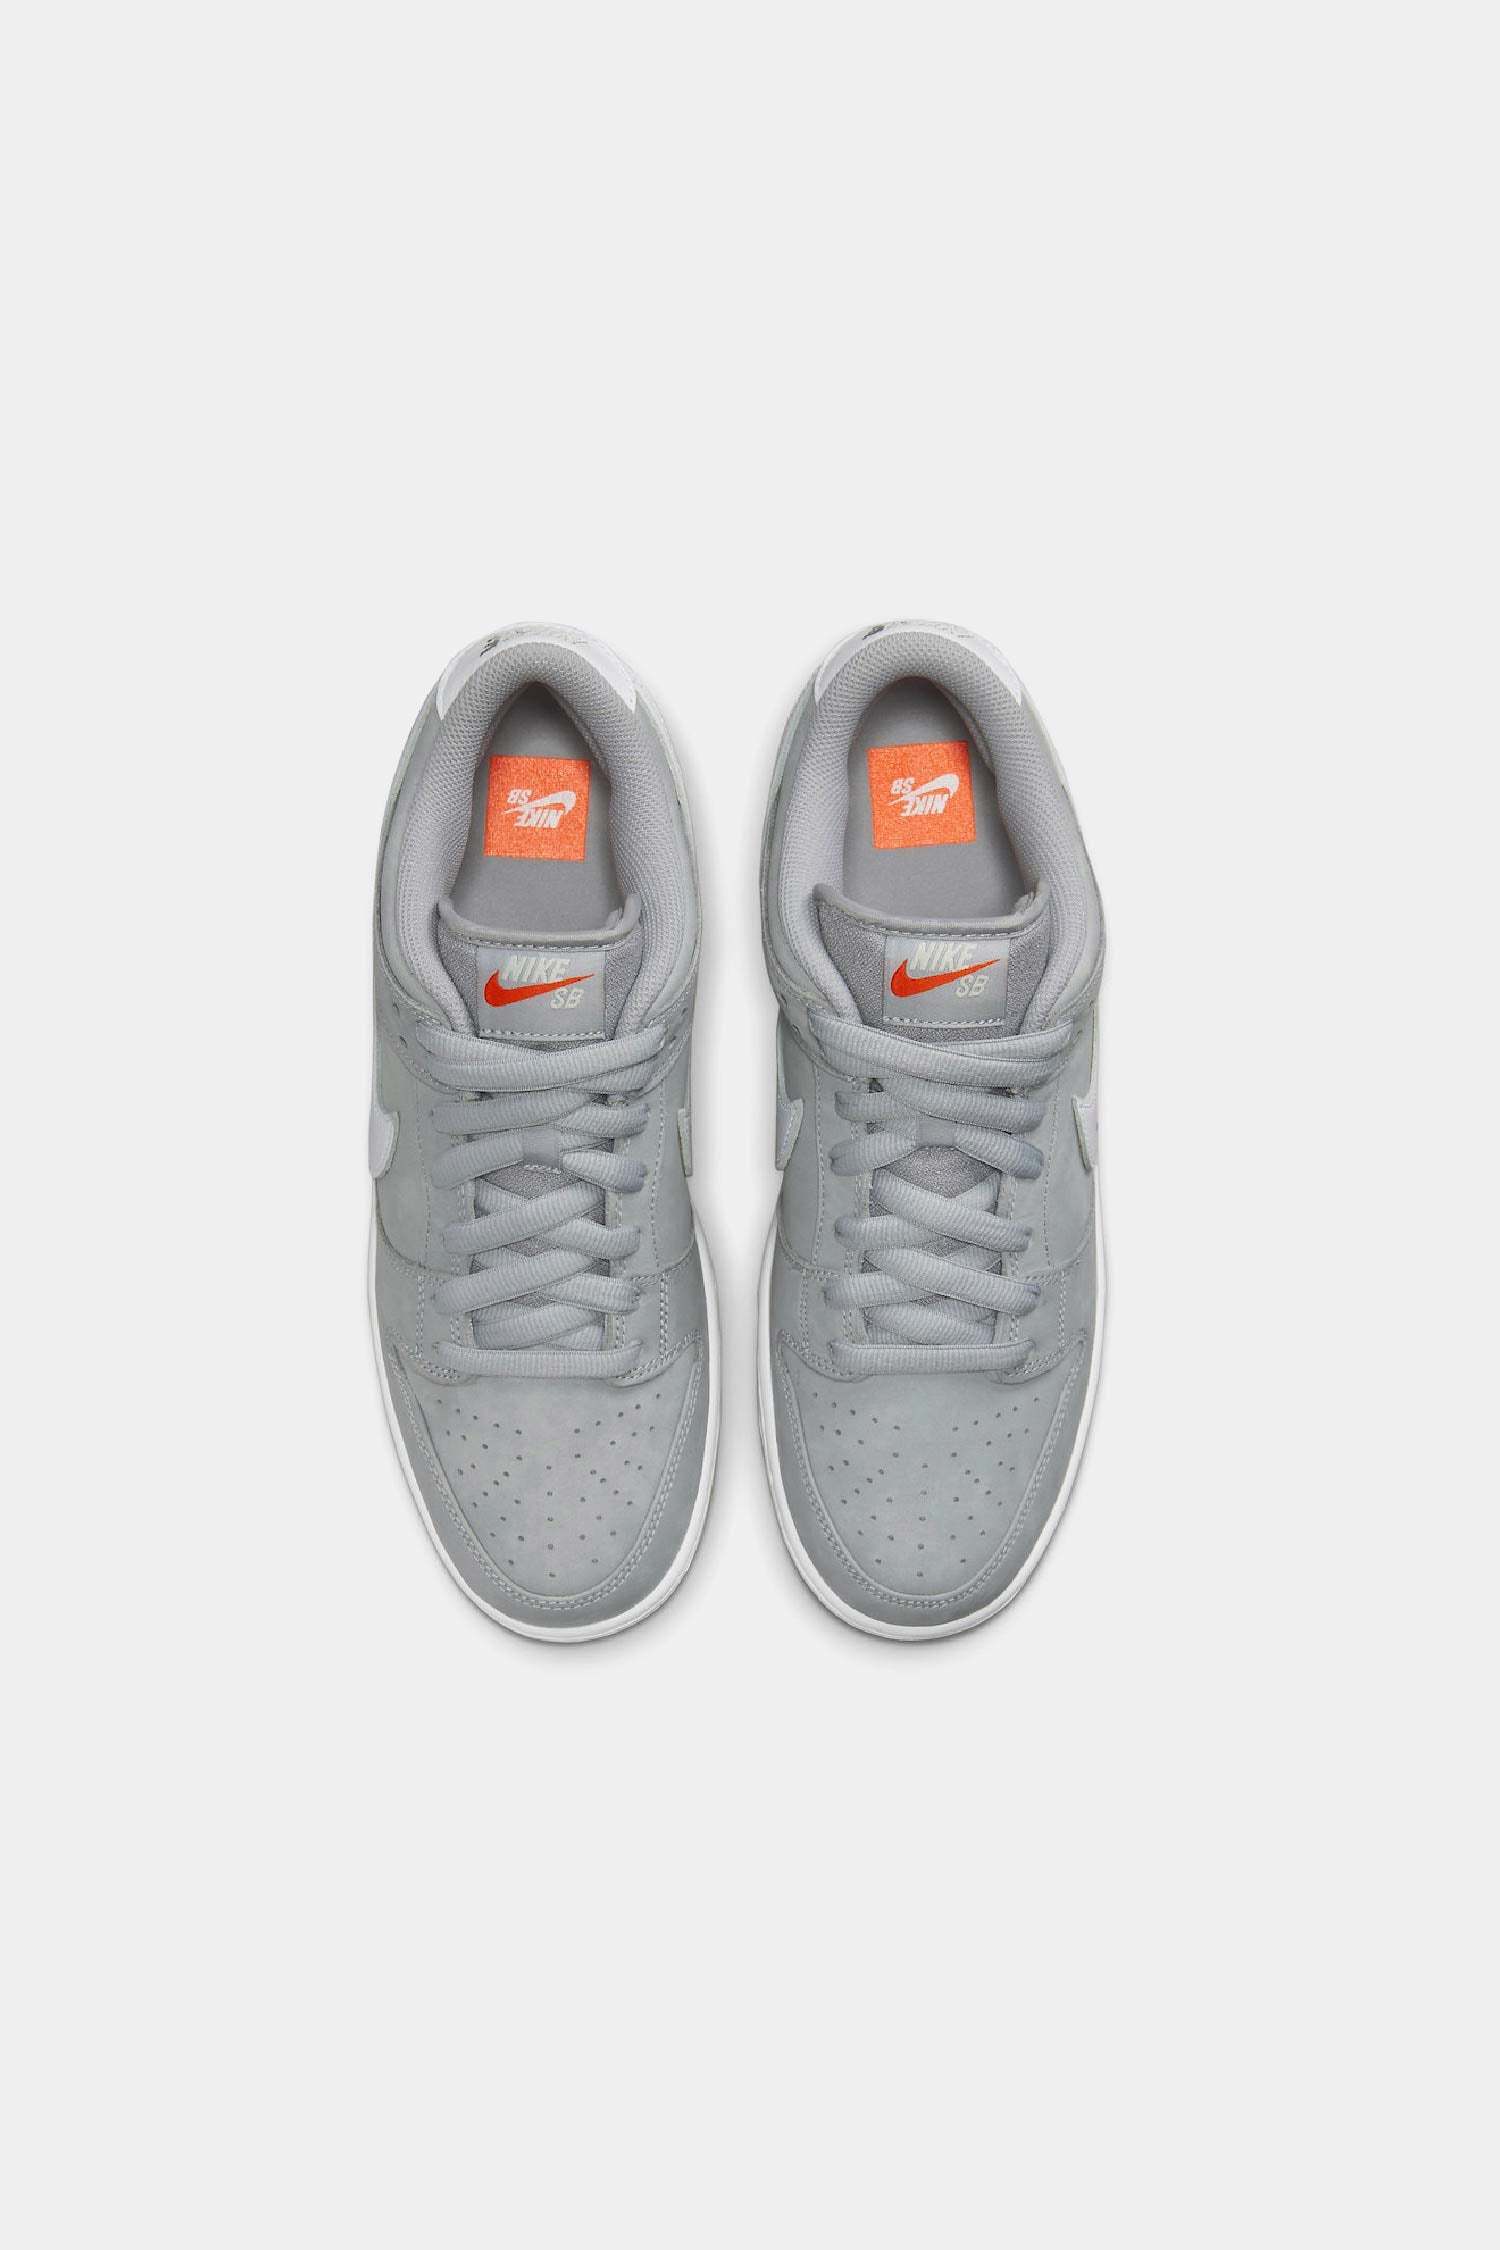 Selectshop FRAME - NIKE SB Nike SB Dunk Low "Grey Gum" Footwear Concept Store Dubai